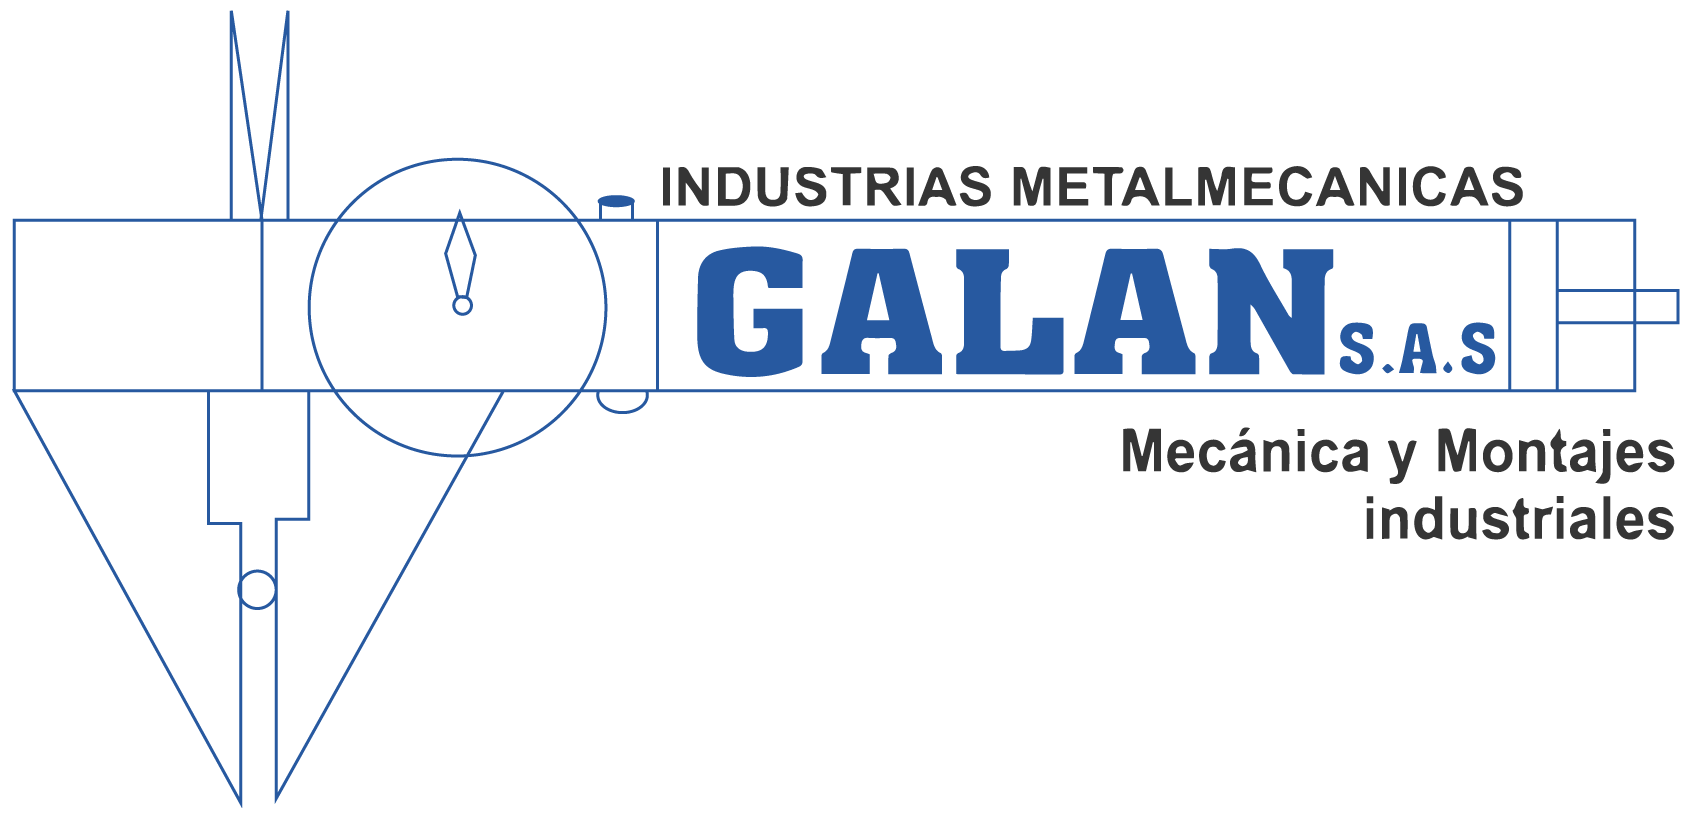 Metalmecánicas Galán